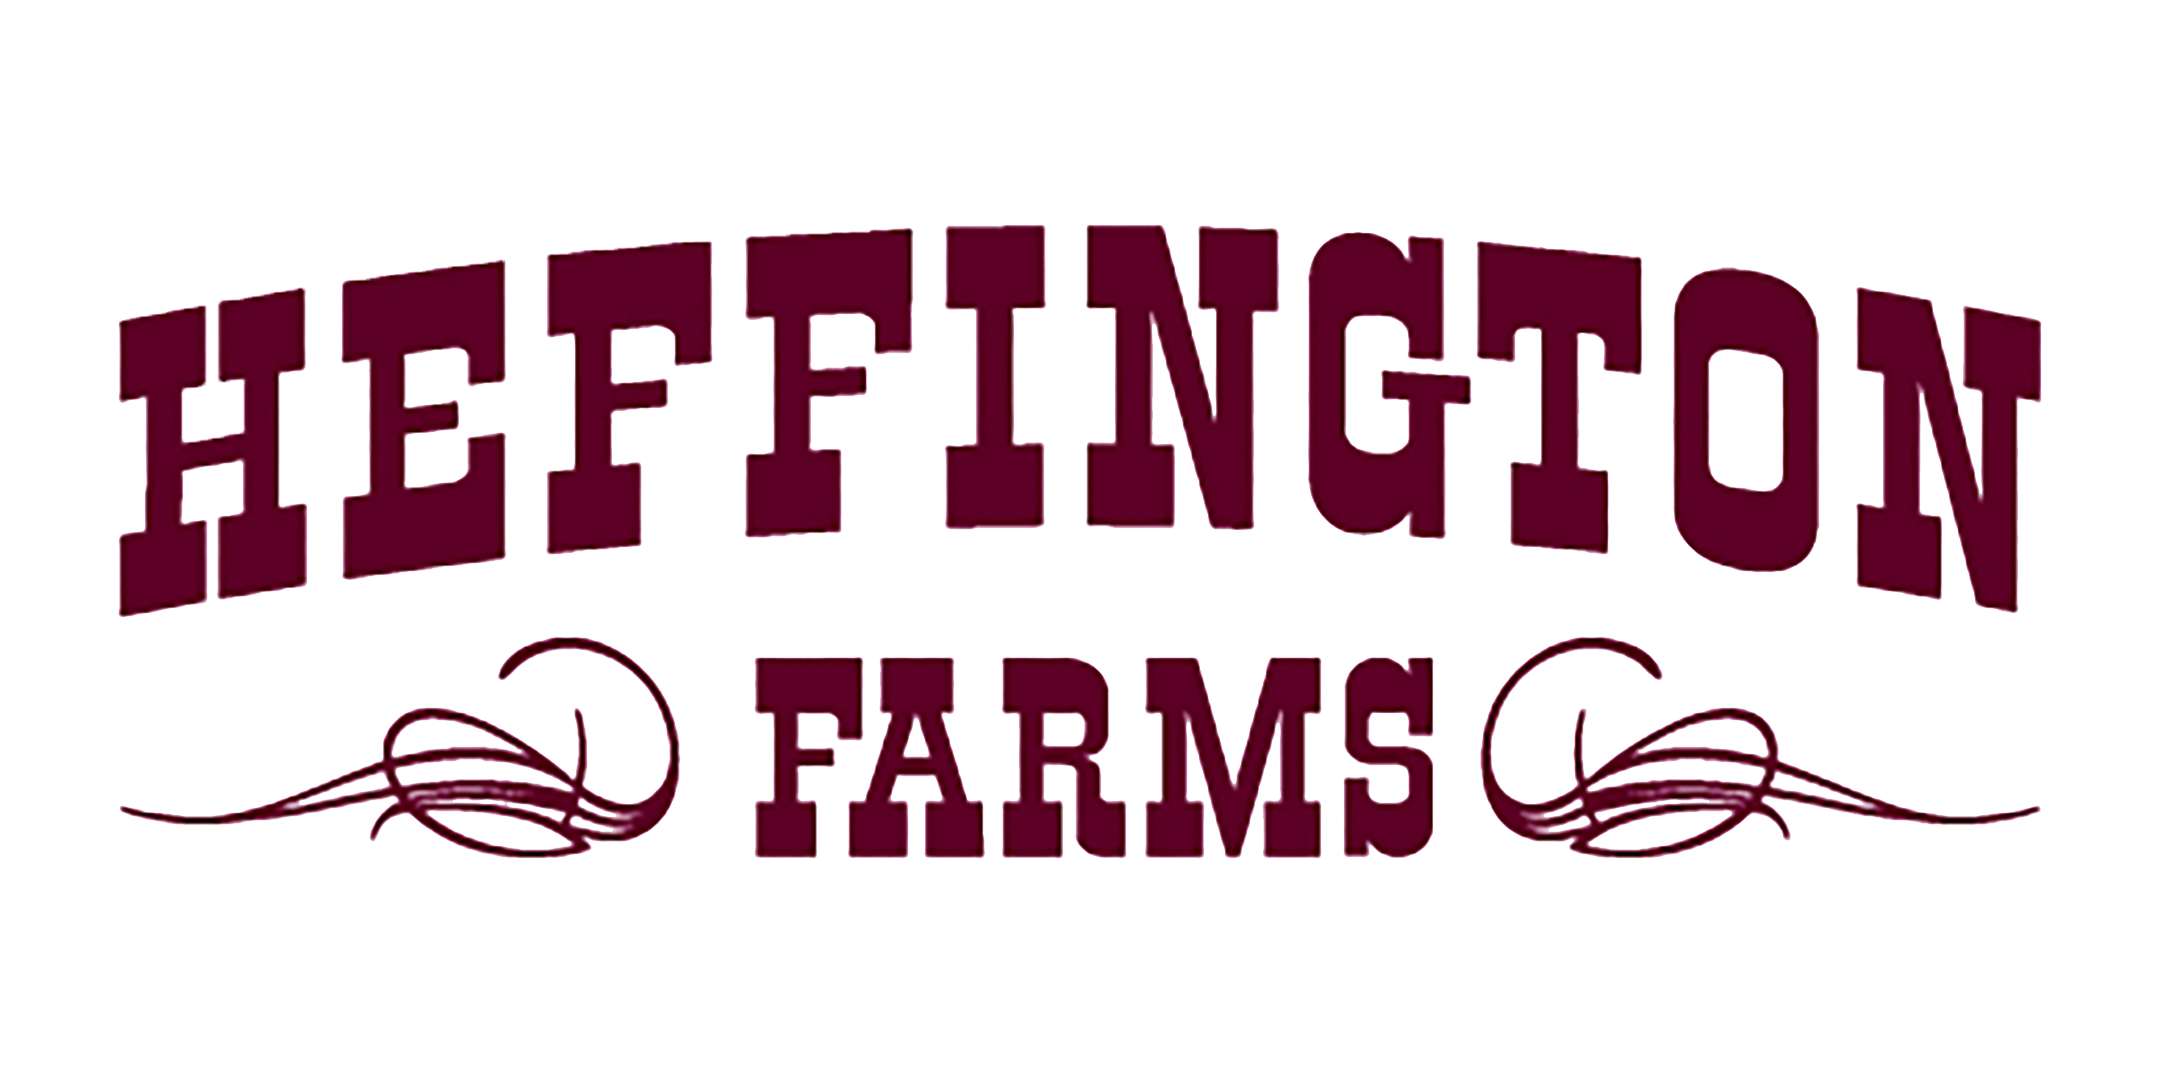 Heffington Farms Logo - Silver Sponsor